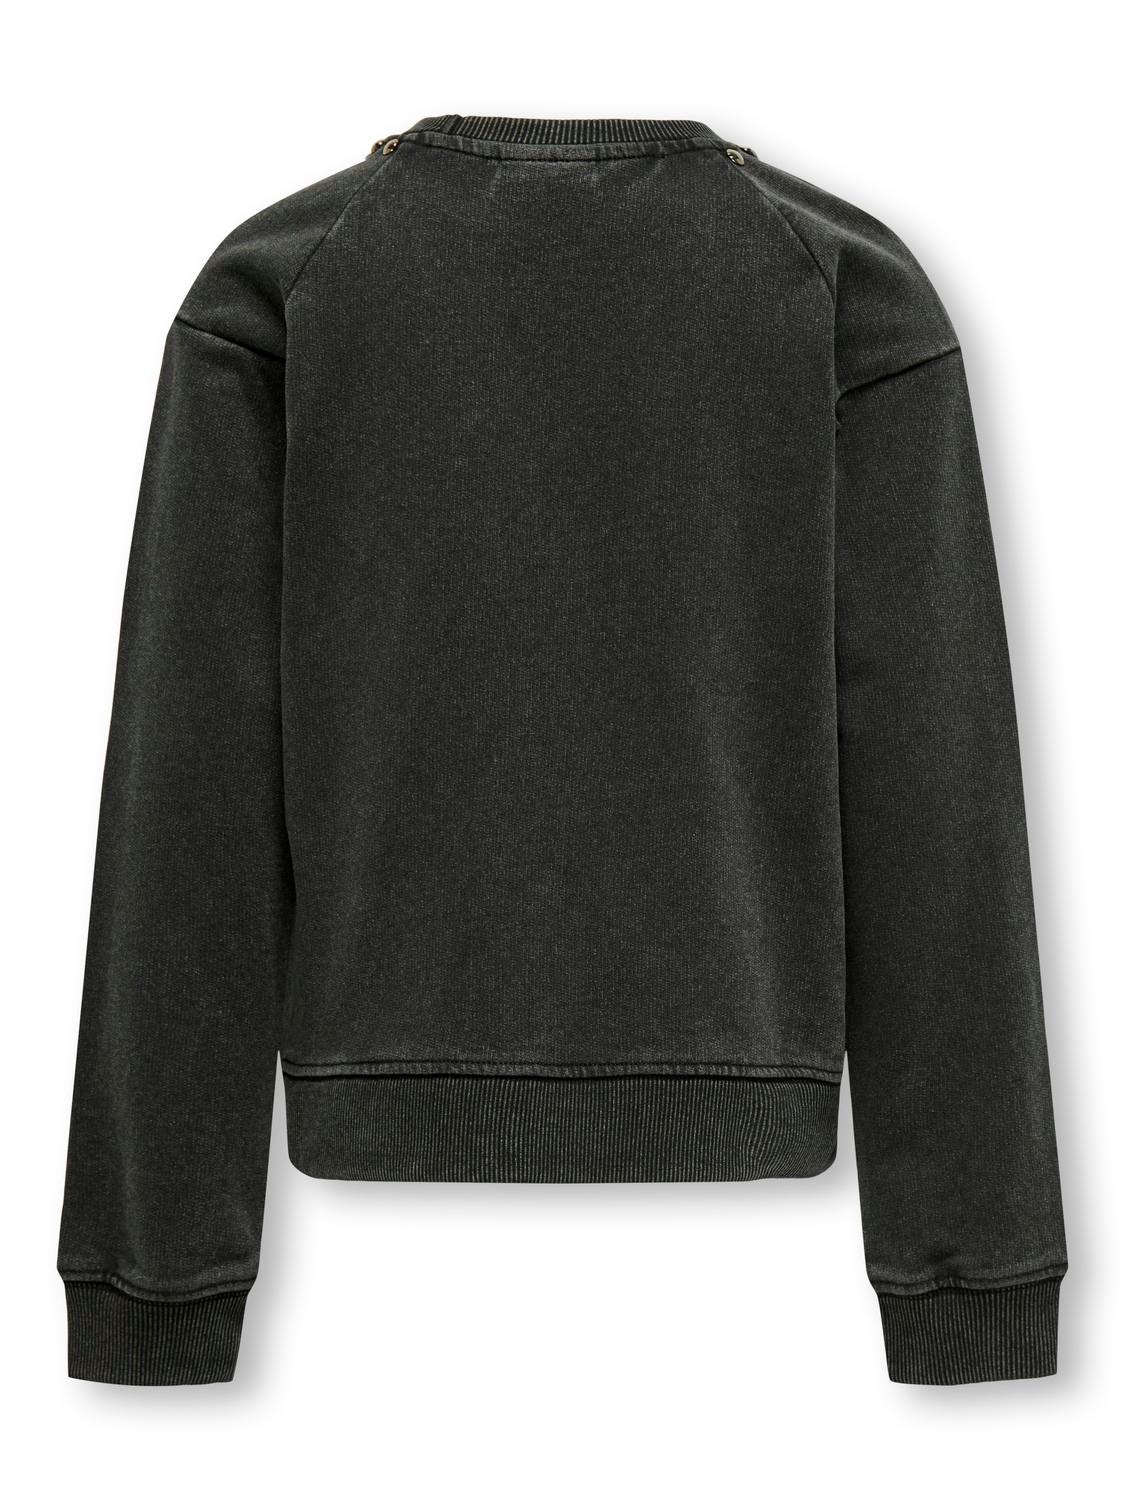 ONLY o-hals sweatshirt -Black - 15320273